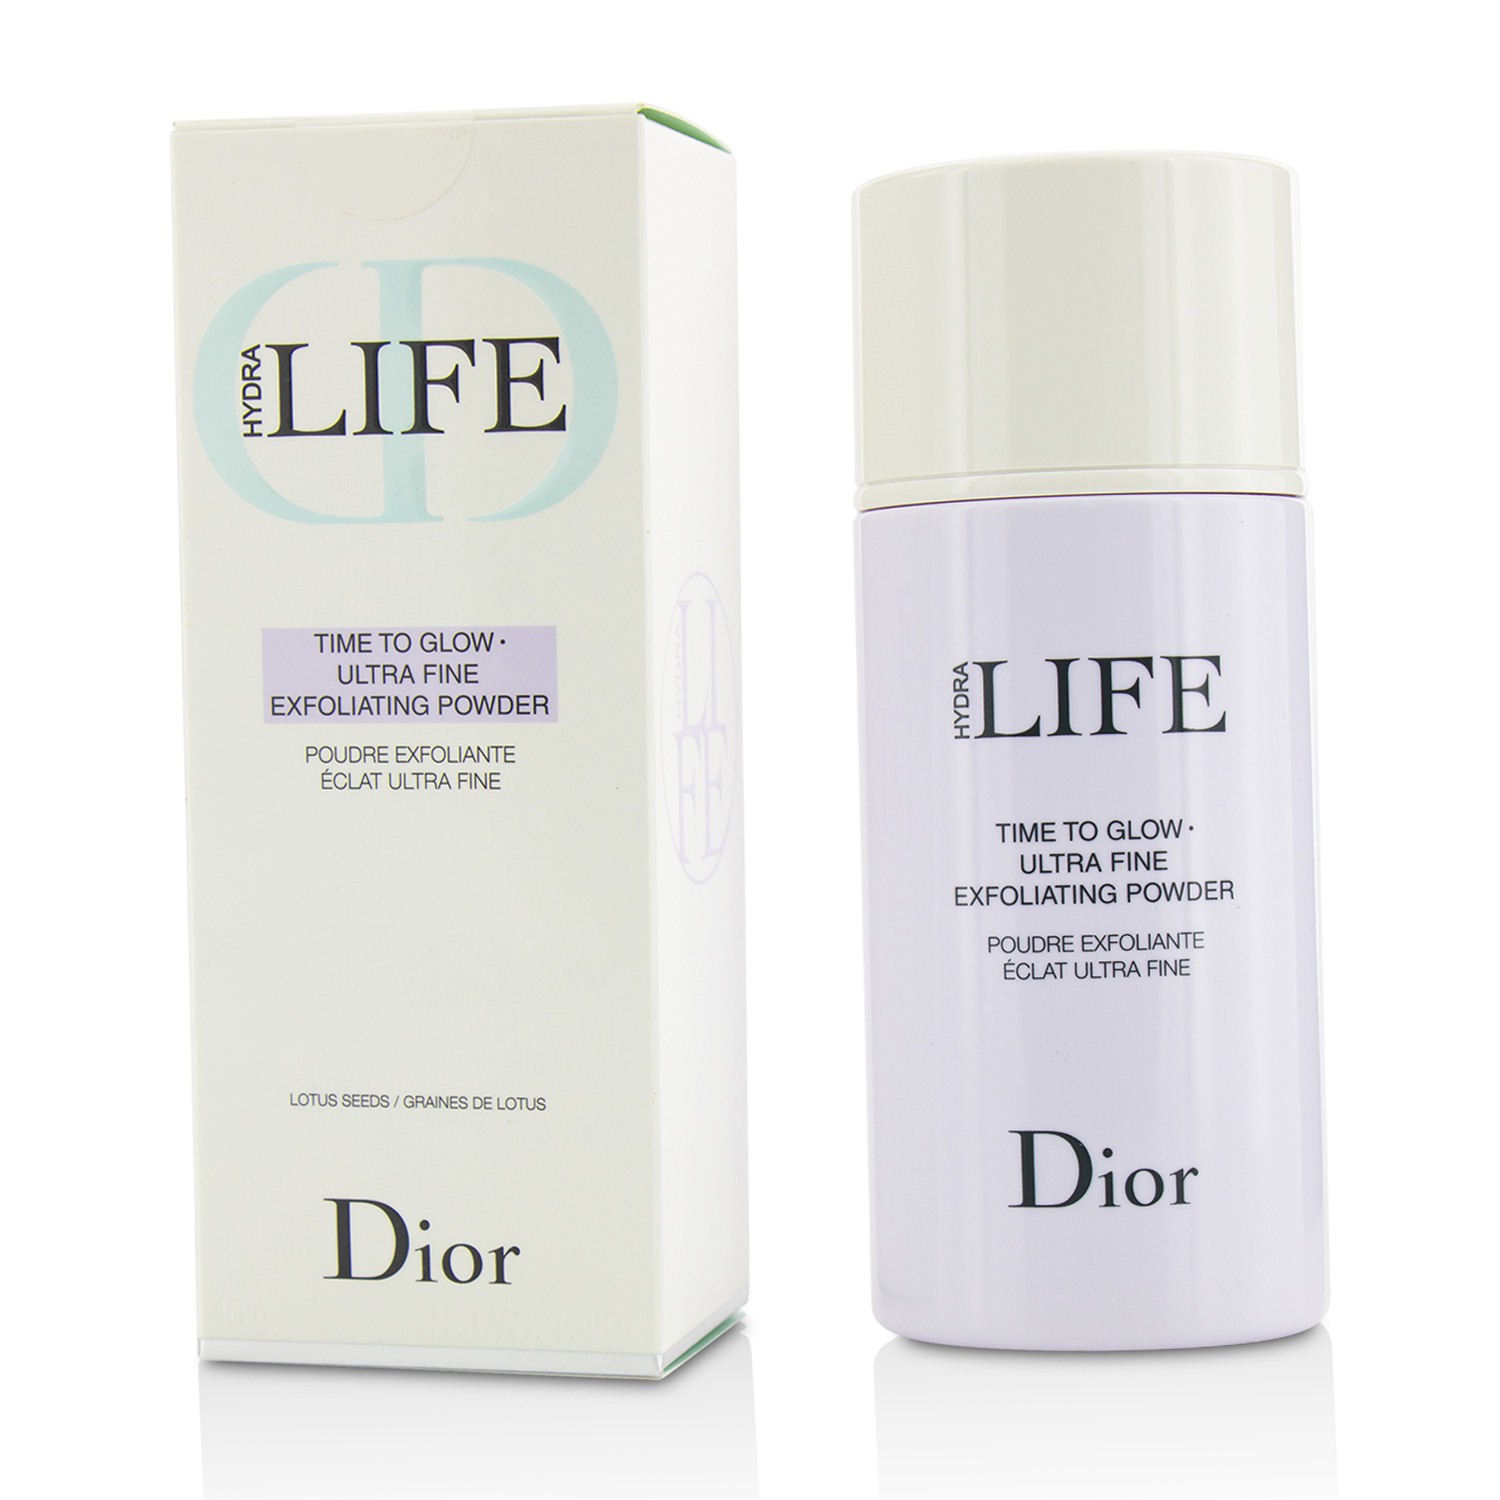 Hydra Life Time To Glow - Ultra Fine Exfoliating Powder Christian Dior Image